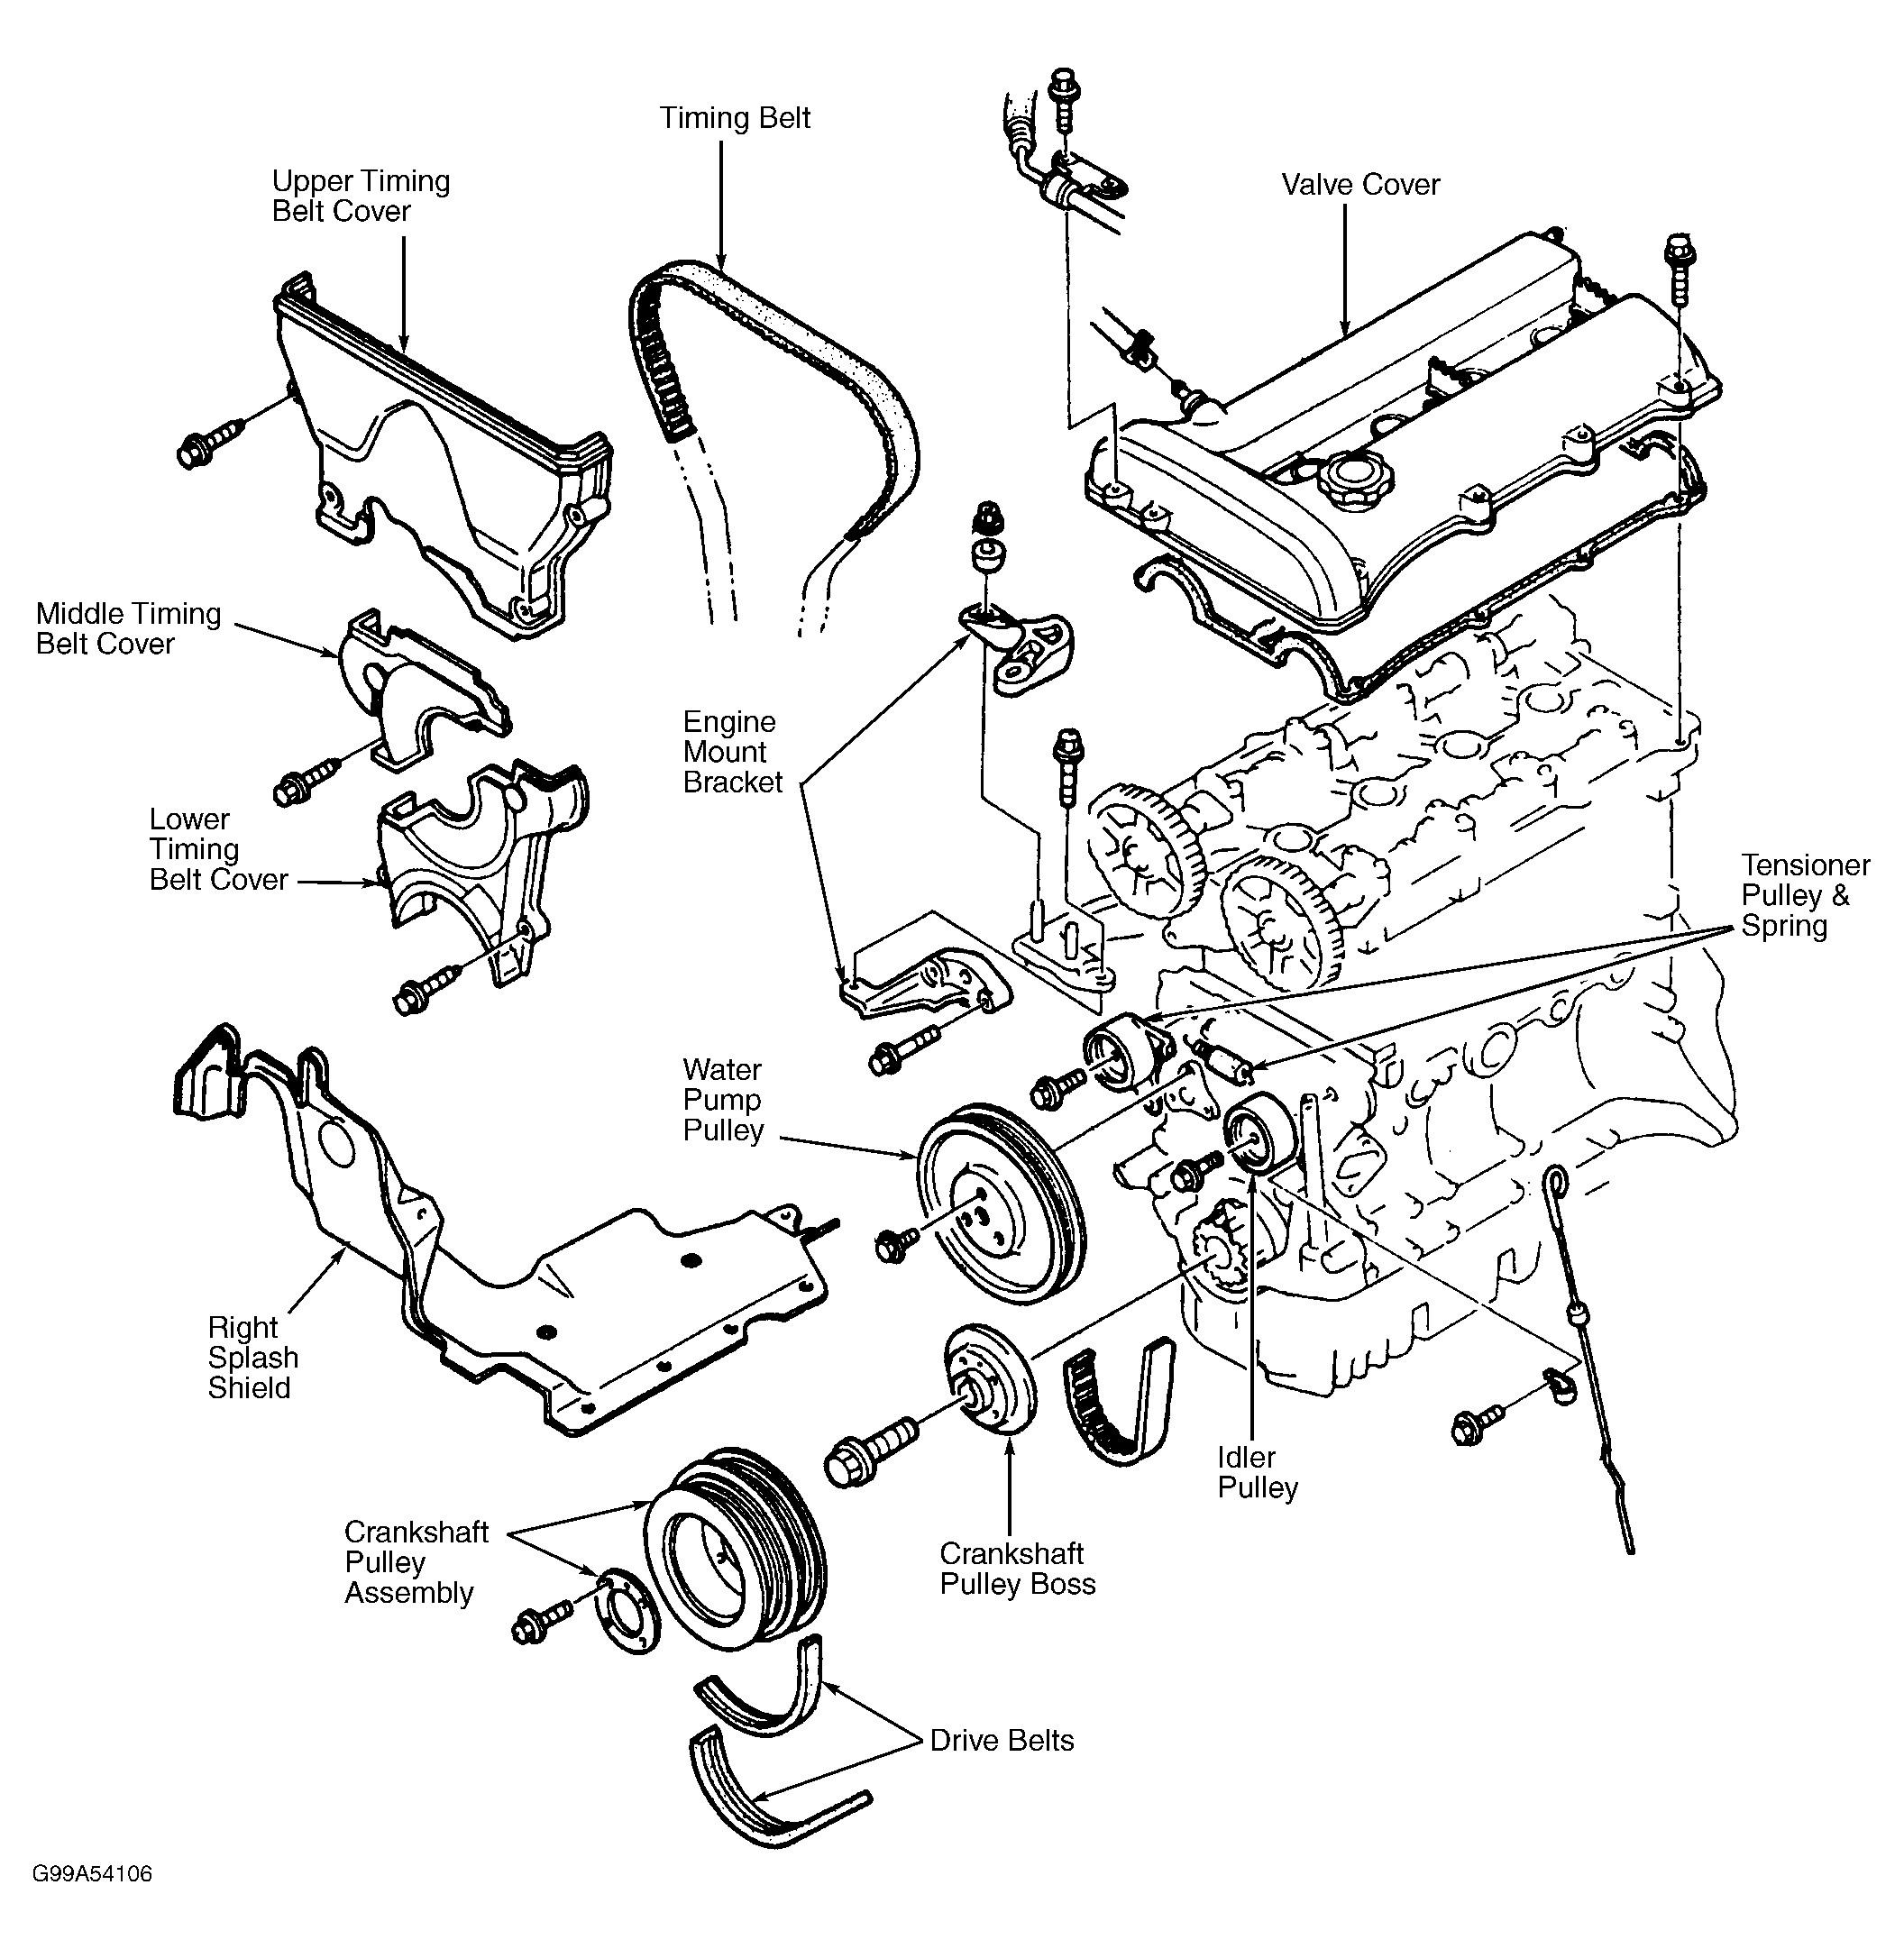 1998 Mazda Mpv Engine Diagram 1998 Mazda Protege Serpentine Belt Routing and Timing Belt Diagrams Of 1998 Mazda Mpv Engine Diagram